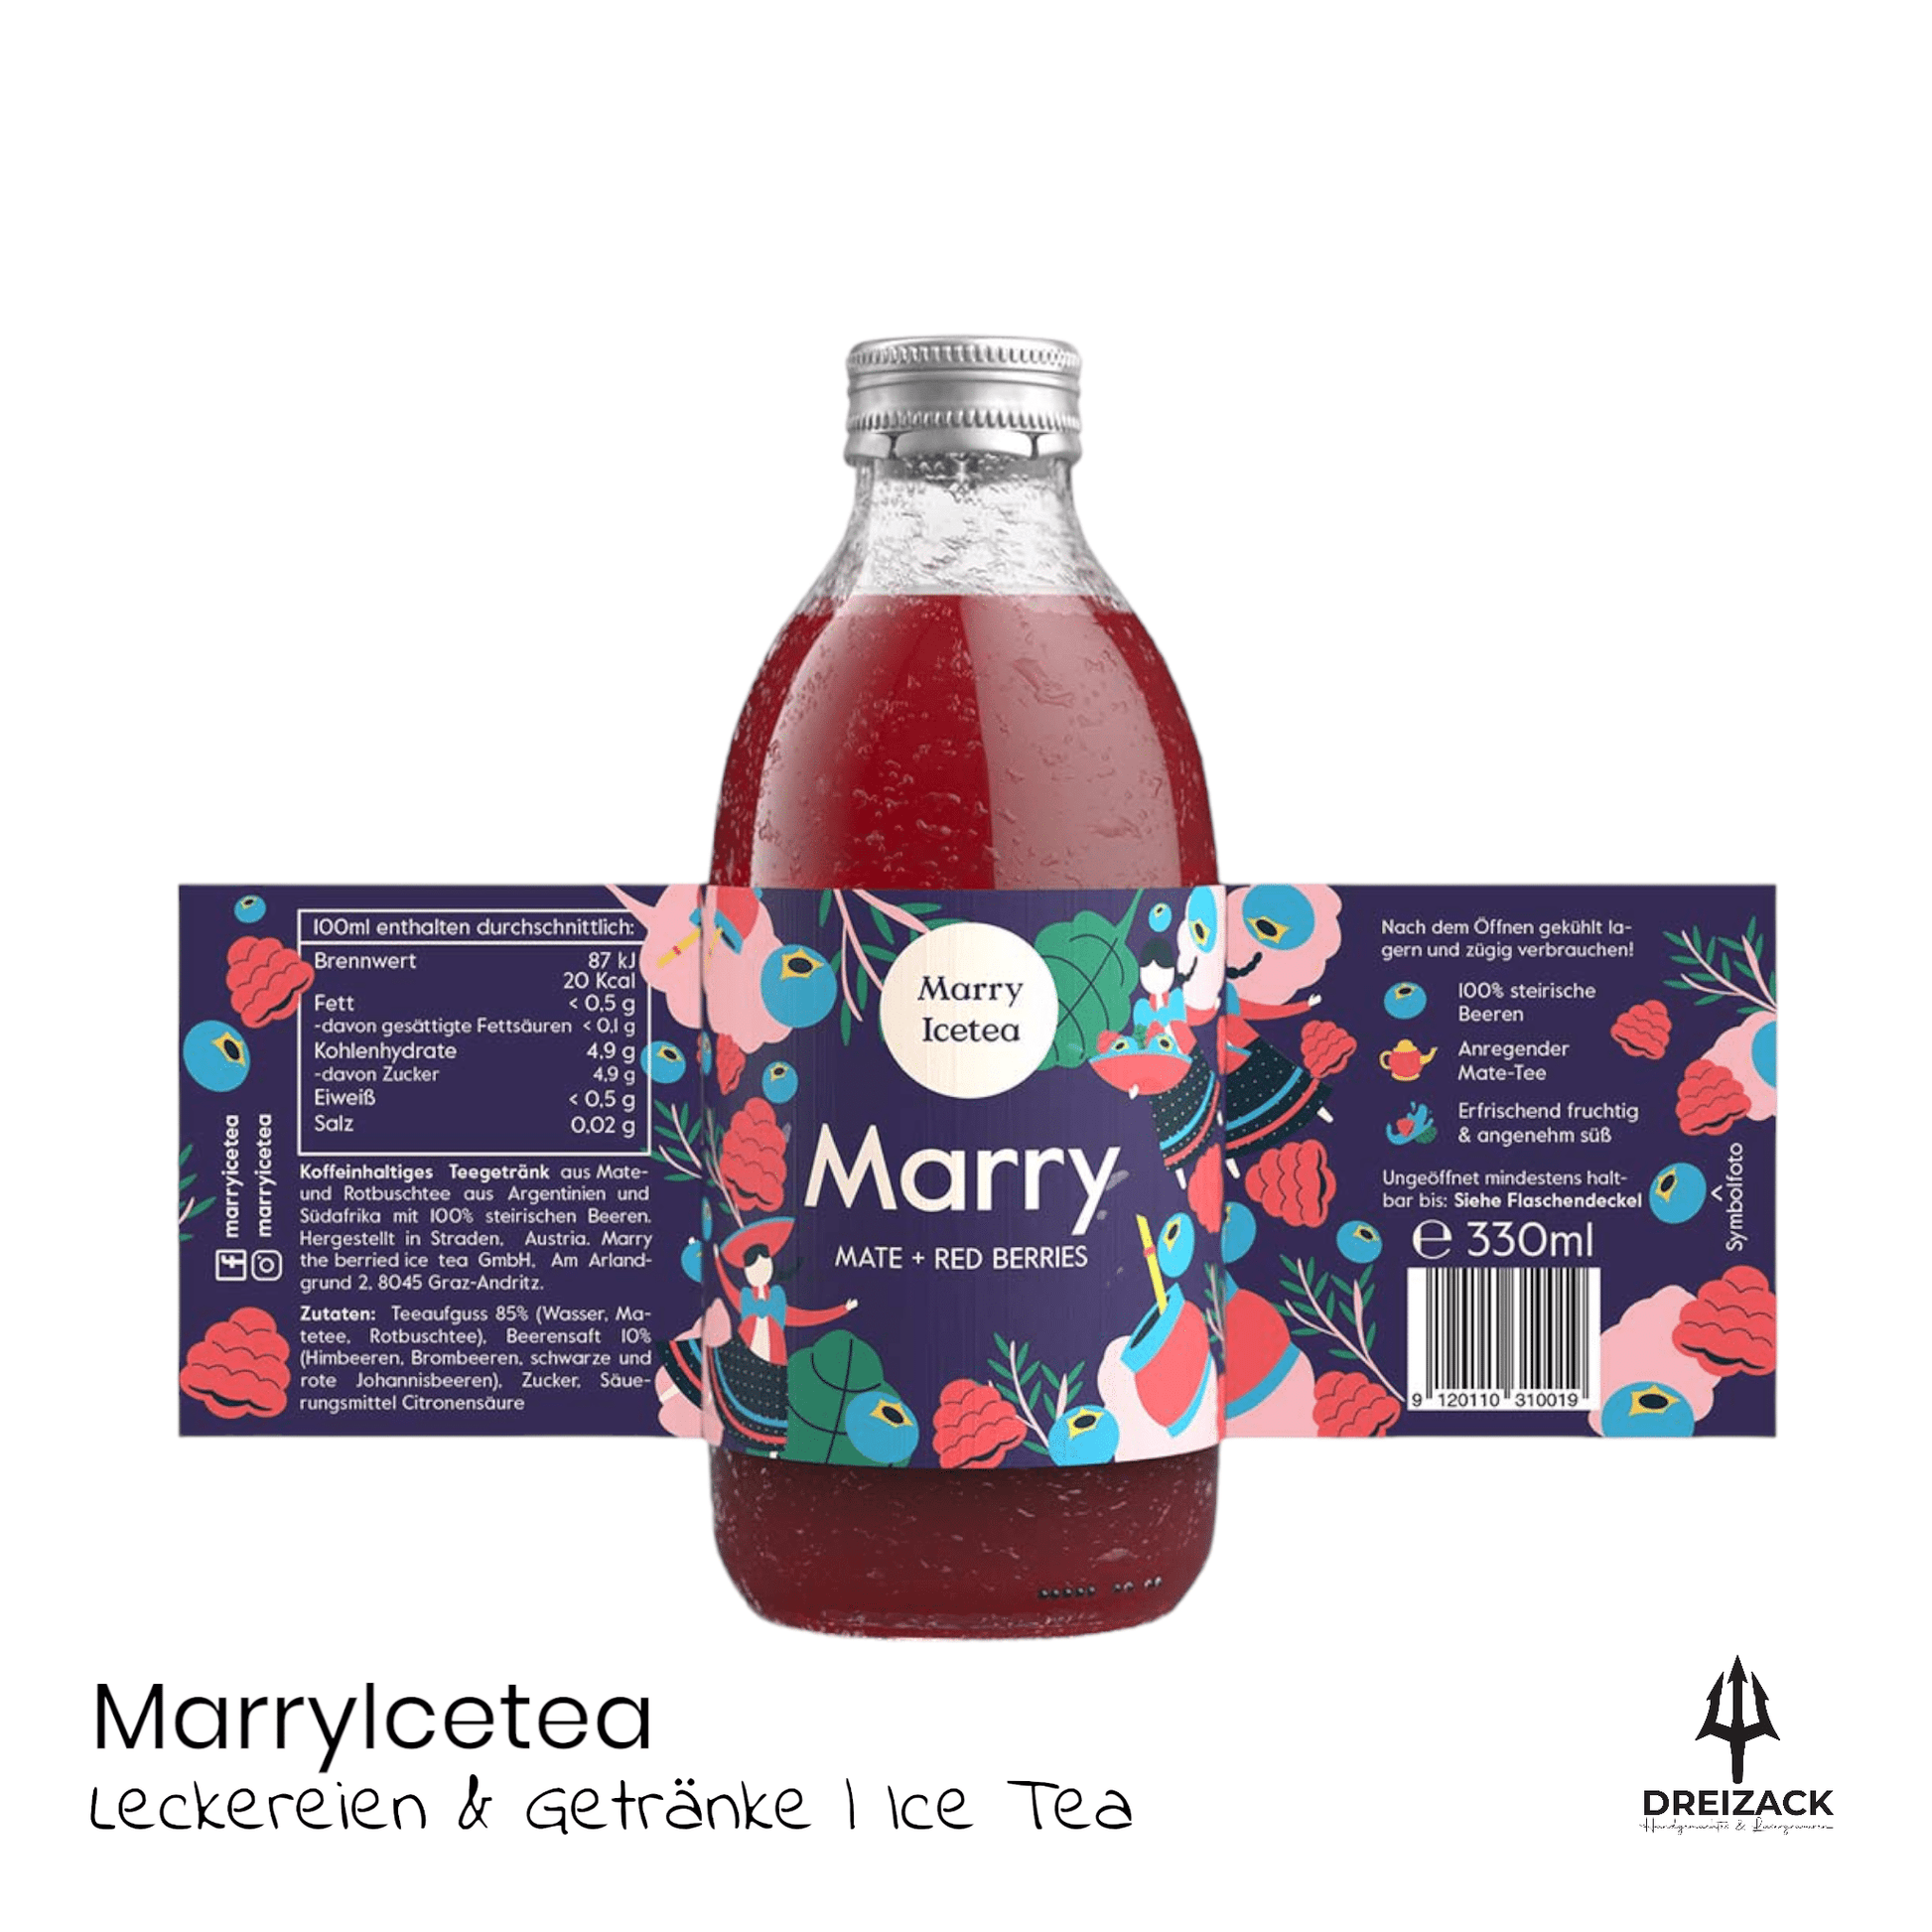 Marry | MarryIcetea - Entdecke den Unterschied Lebensmittel & Getränke MarryIcetea oesterreich handgemachte geschenke in wien